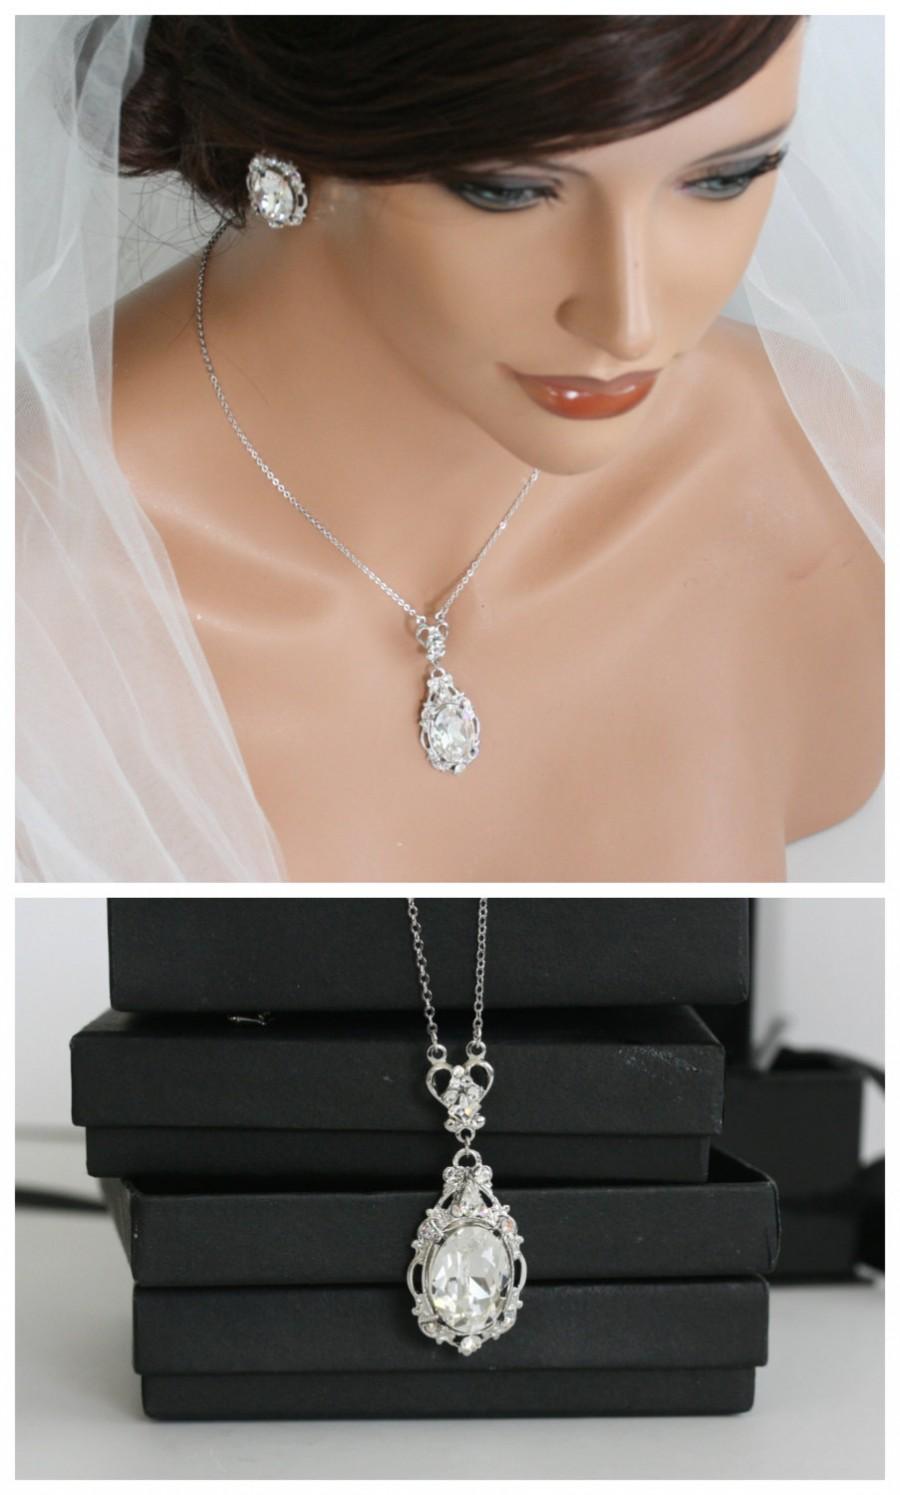 زفاف - Pendant Bridal Necklace Swarovski Crystal Simple Wedding Necklace Vintage necklace Rhinestone Wedding jewelry RYAN PENDANT